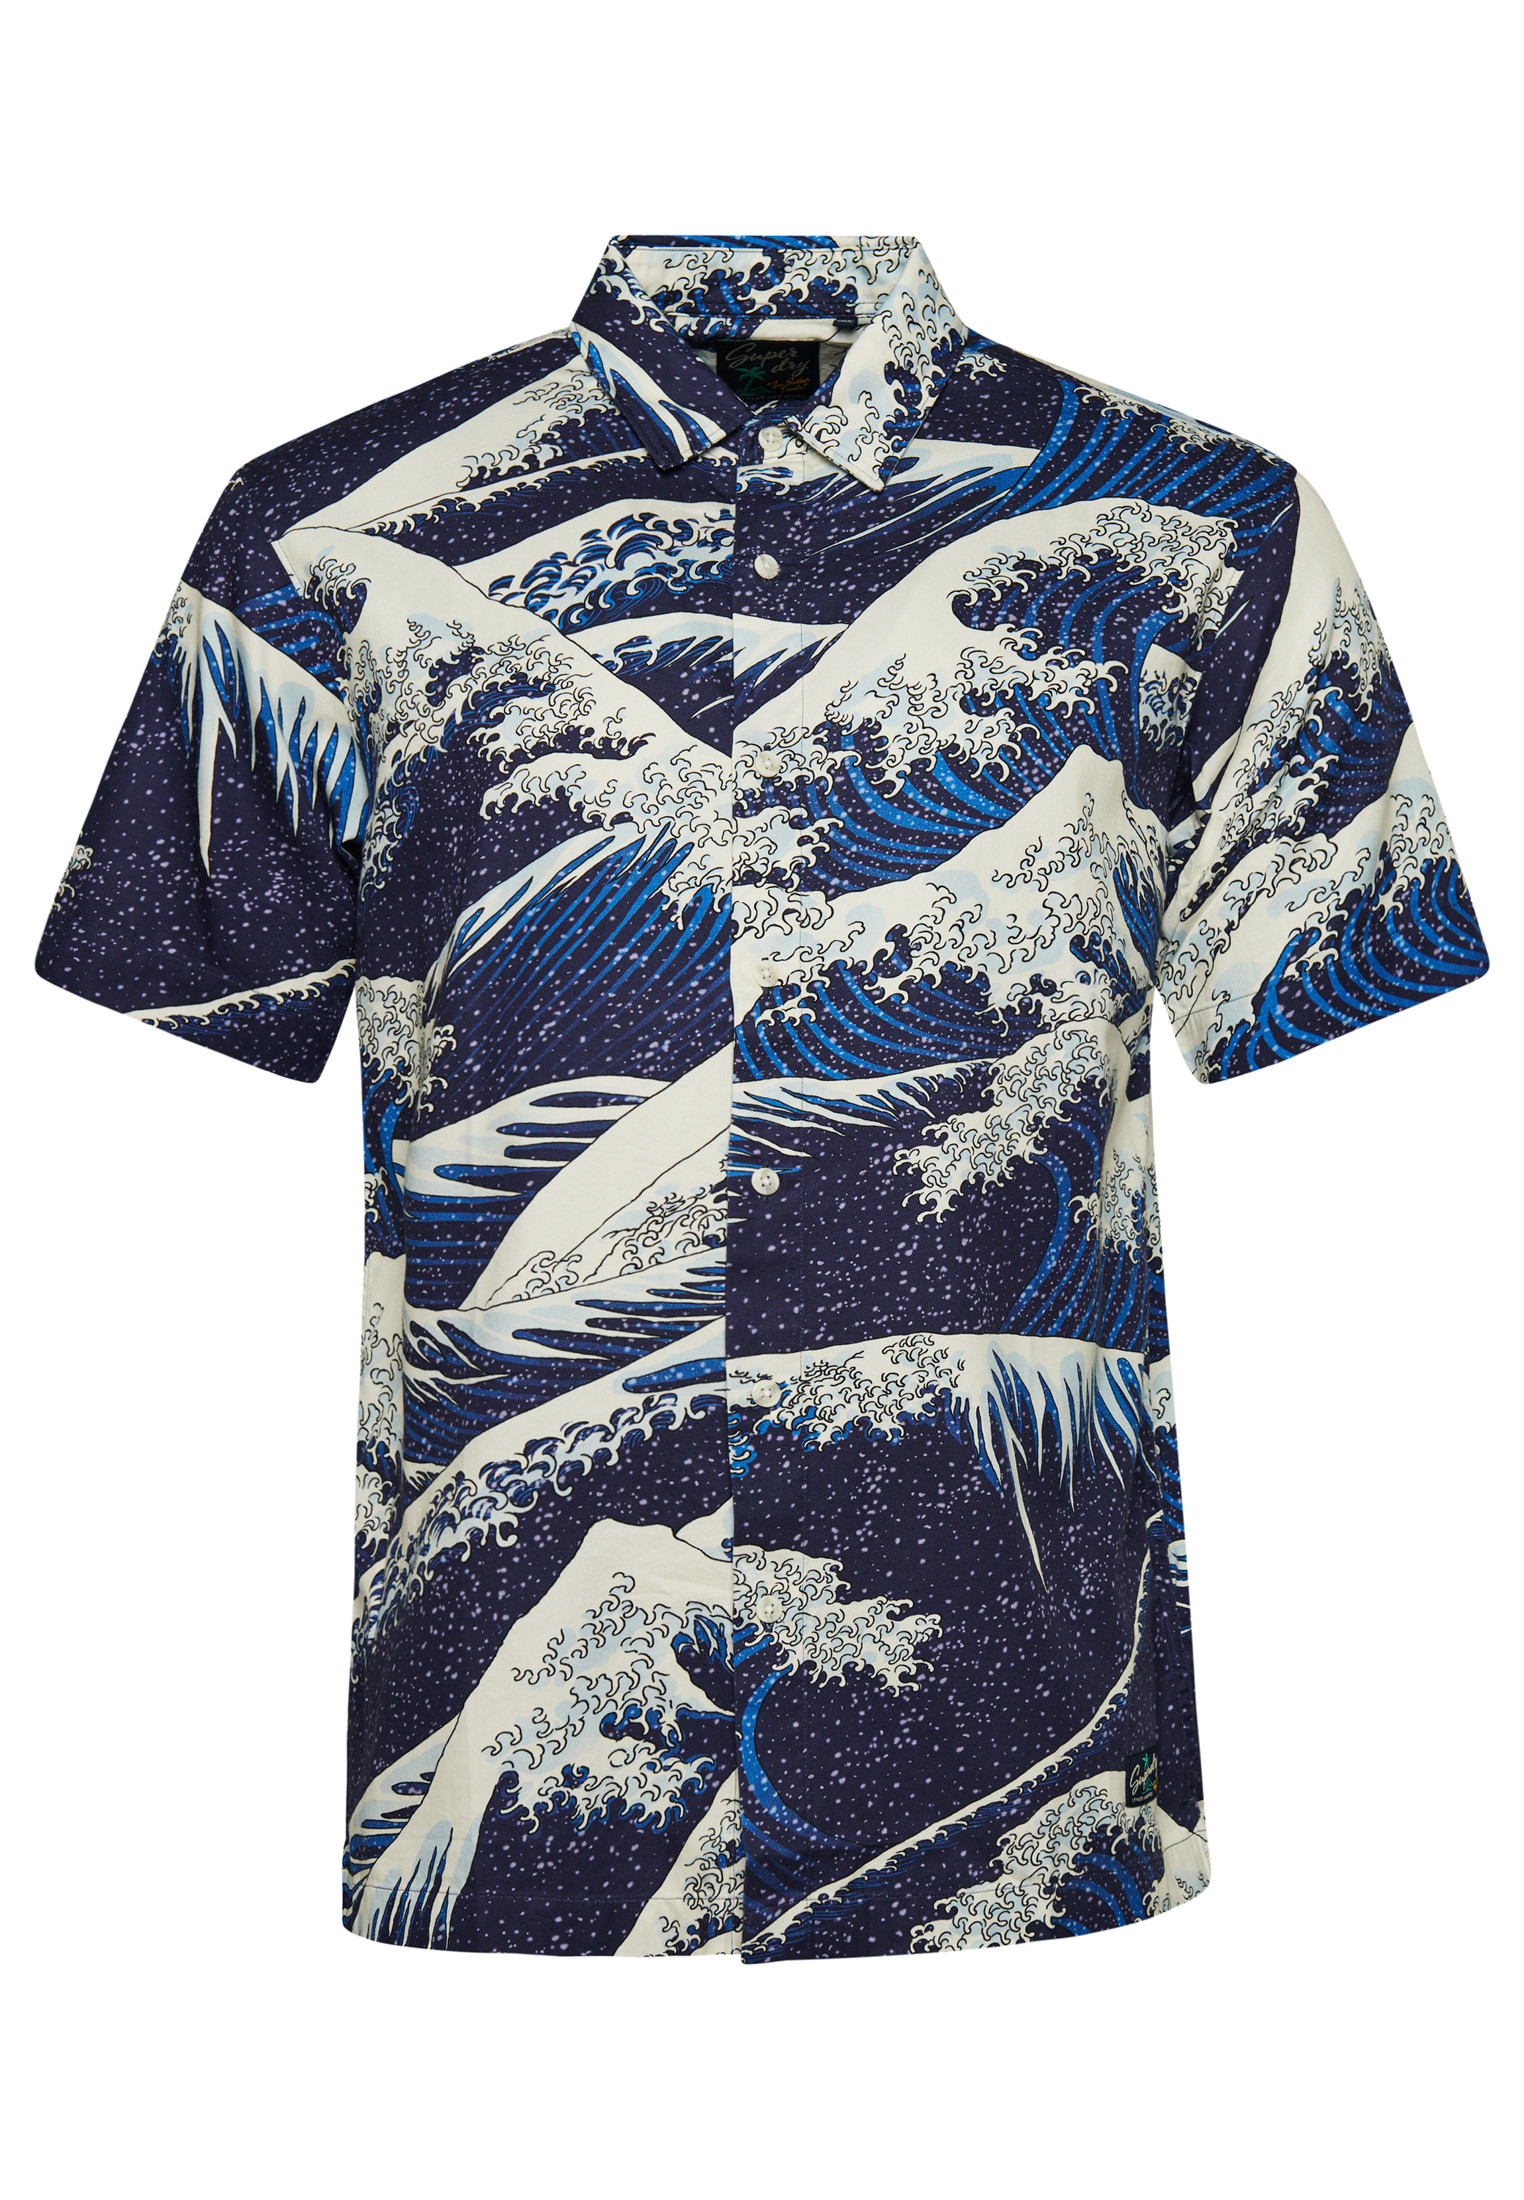 Superdry - Camicia a manica corta con stampa onde marine, Blu, large image number 0